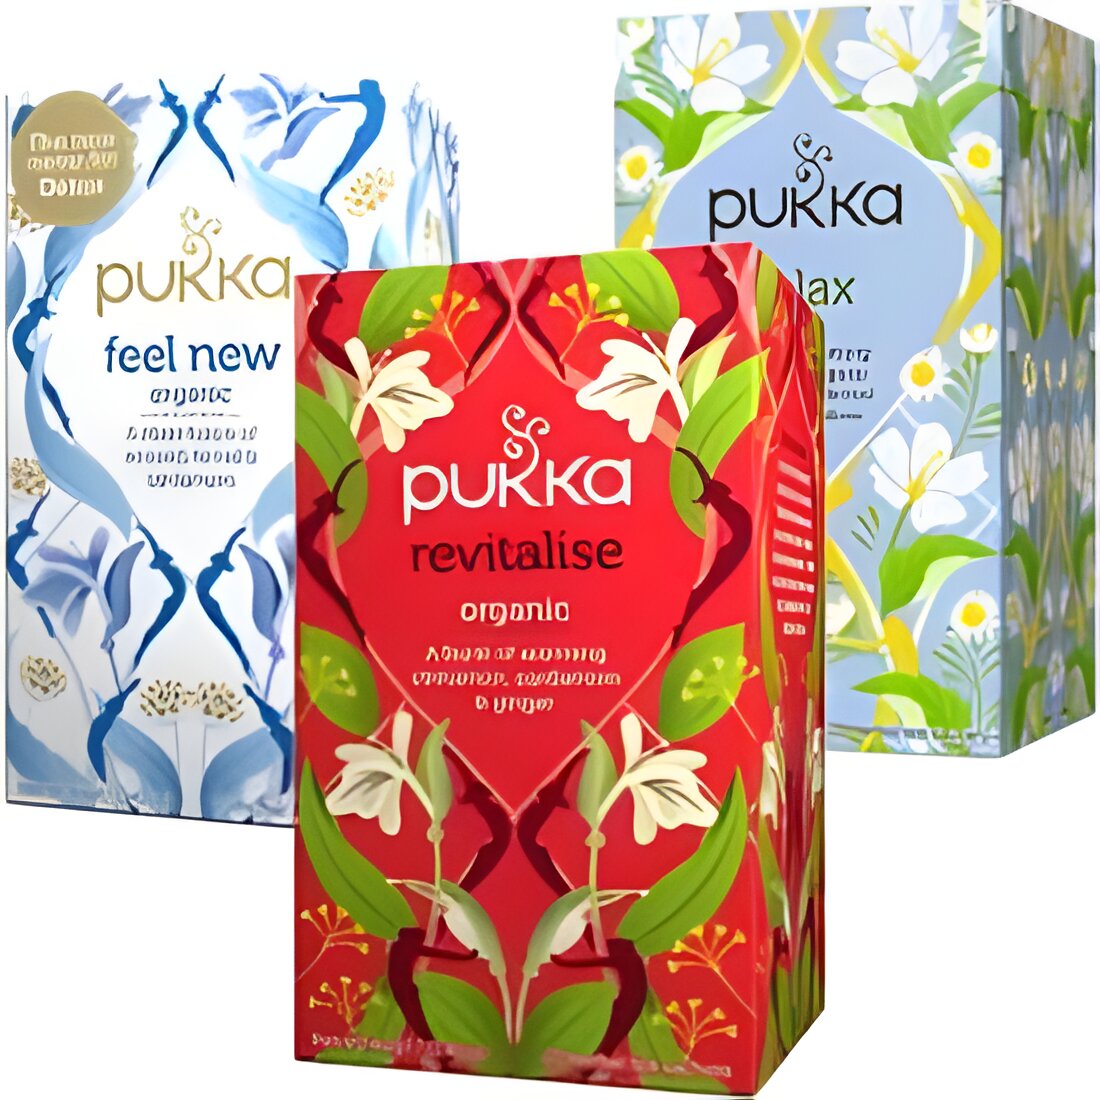 Free Pukka Herbal Tea